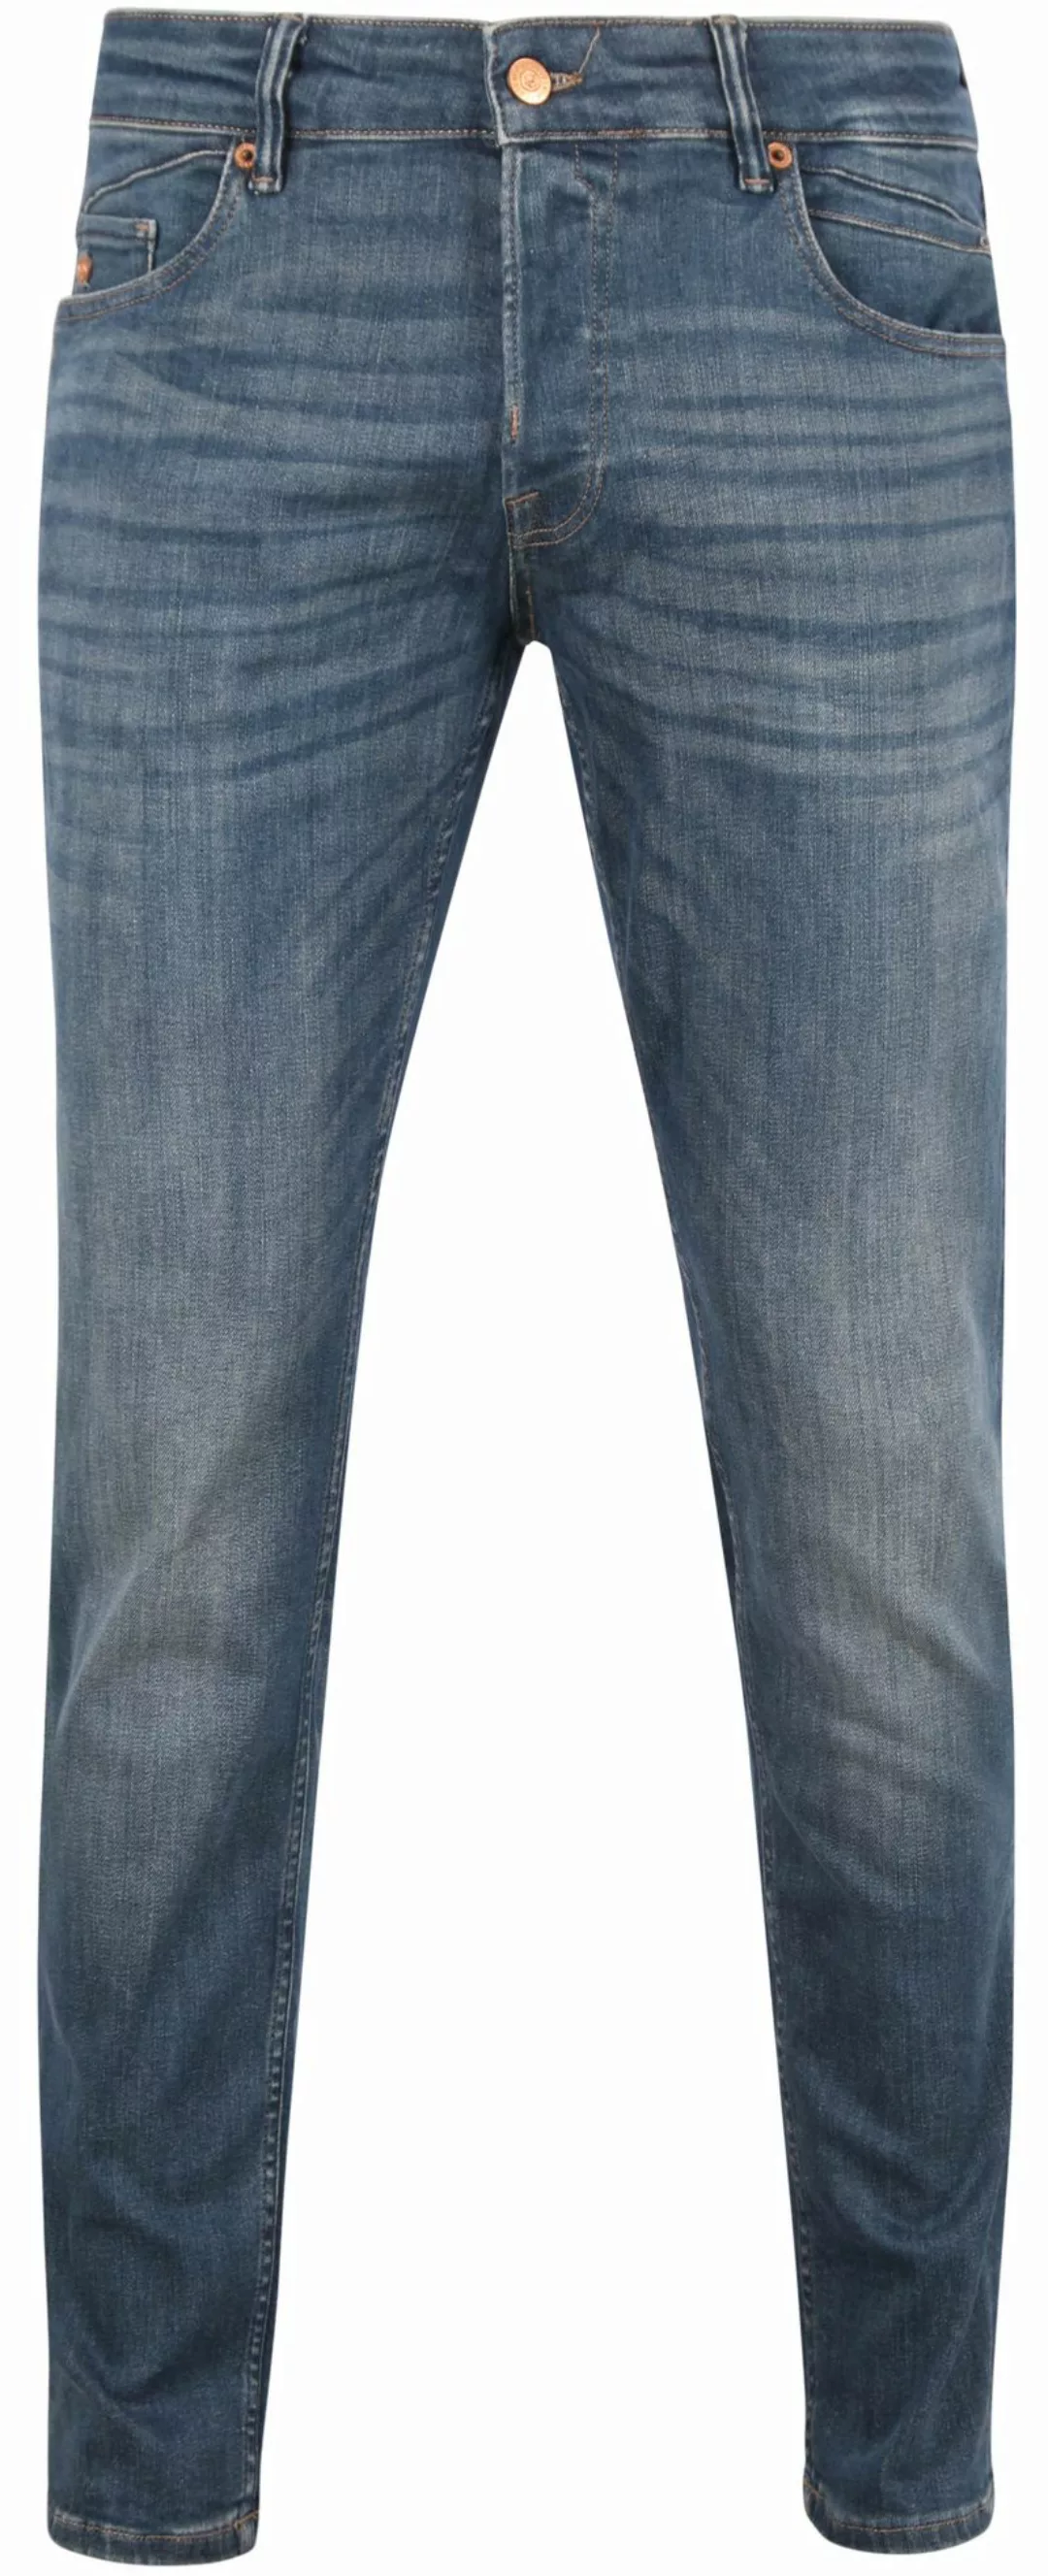 Cast Iron Shiftback Jeans Blau NBD - Größe W 32 - L 34 günstig online kaufen